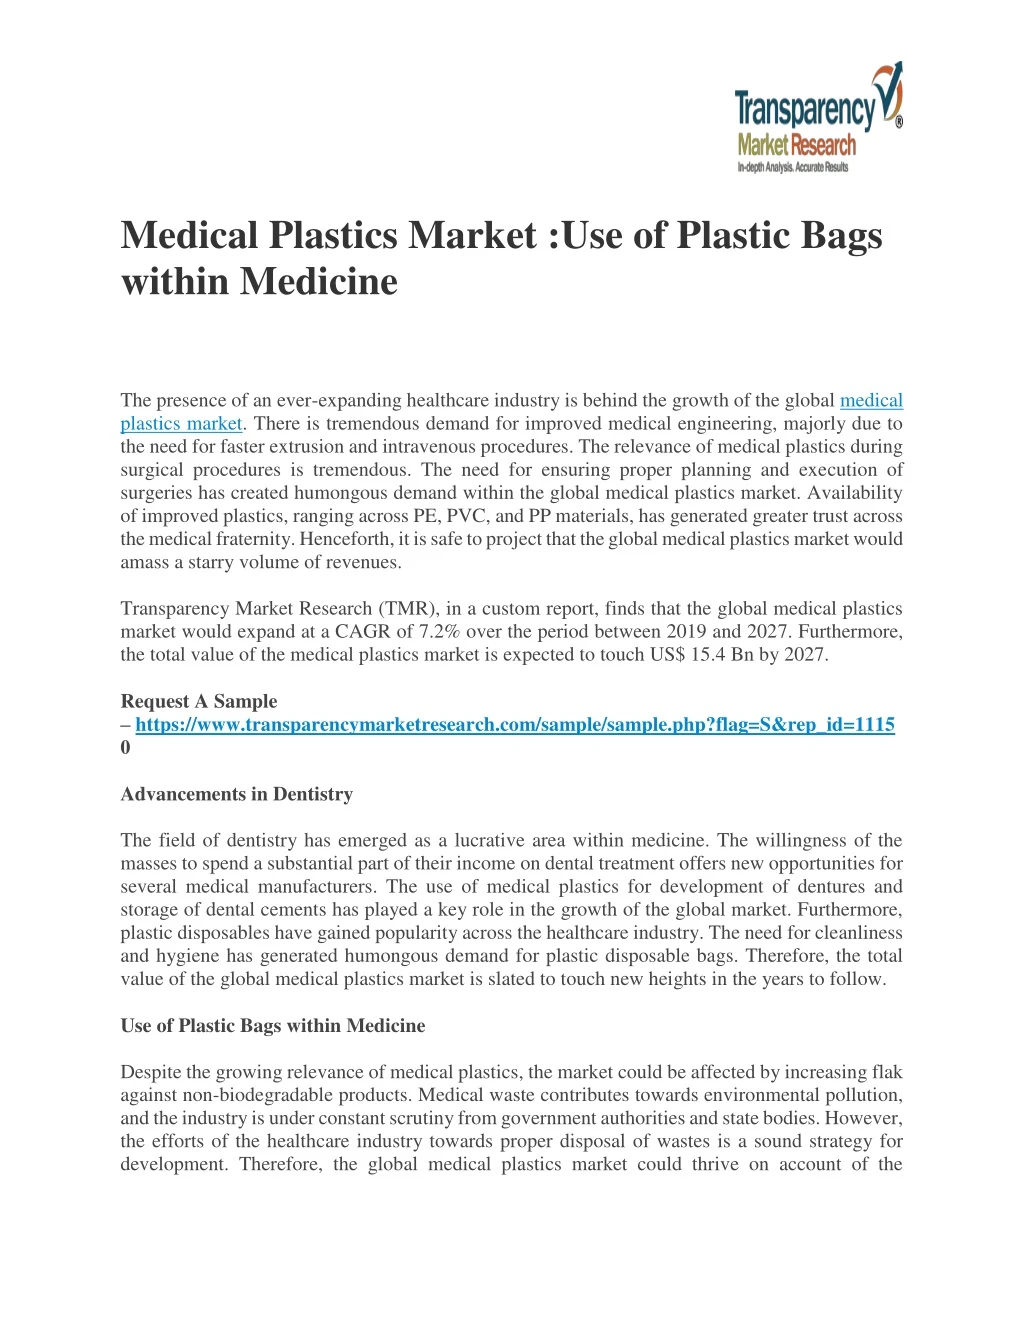 medical plastics market use of plastic bags